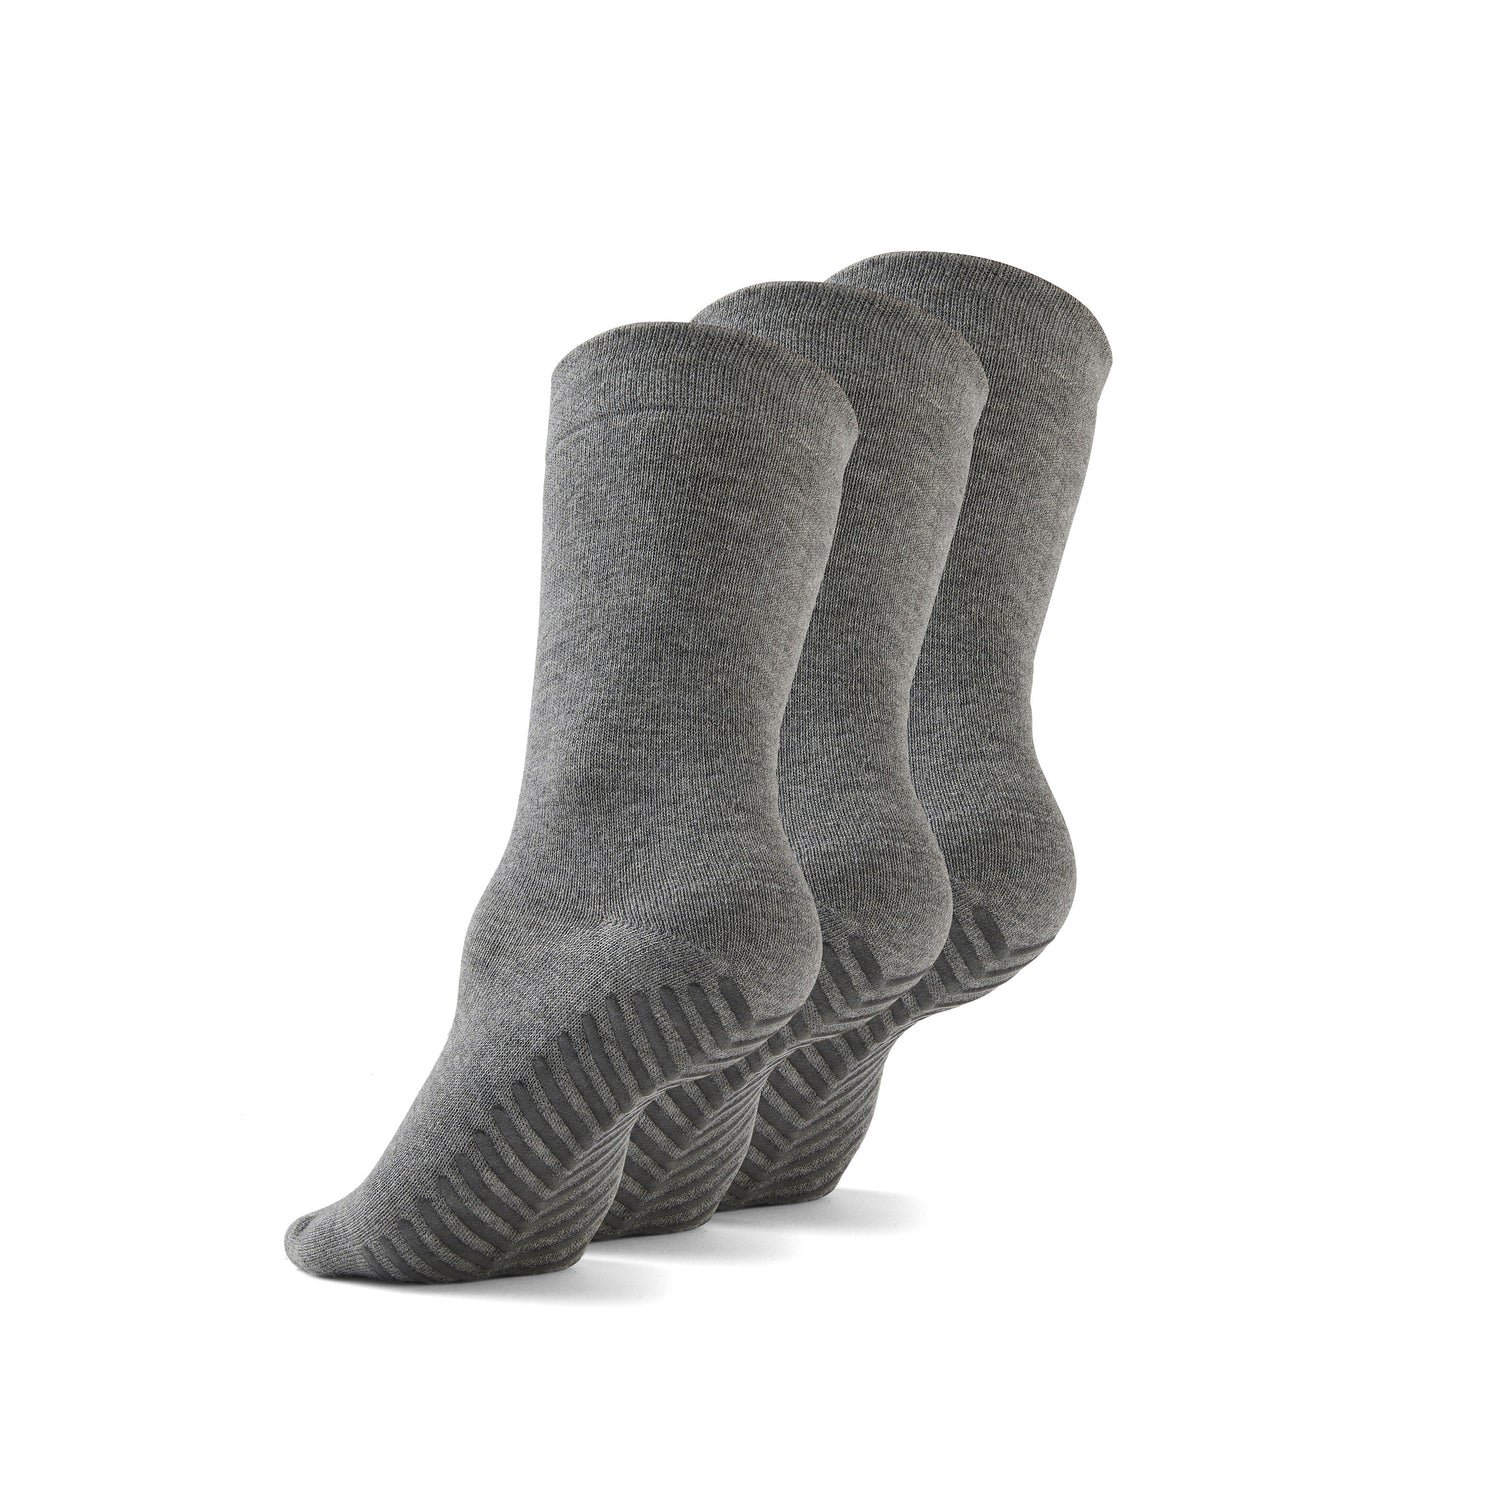 Light grey anti slip socks made of soft cotton that sit just below the calf.